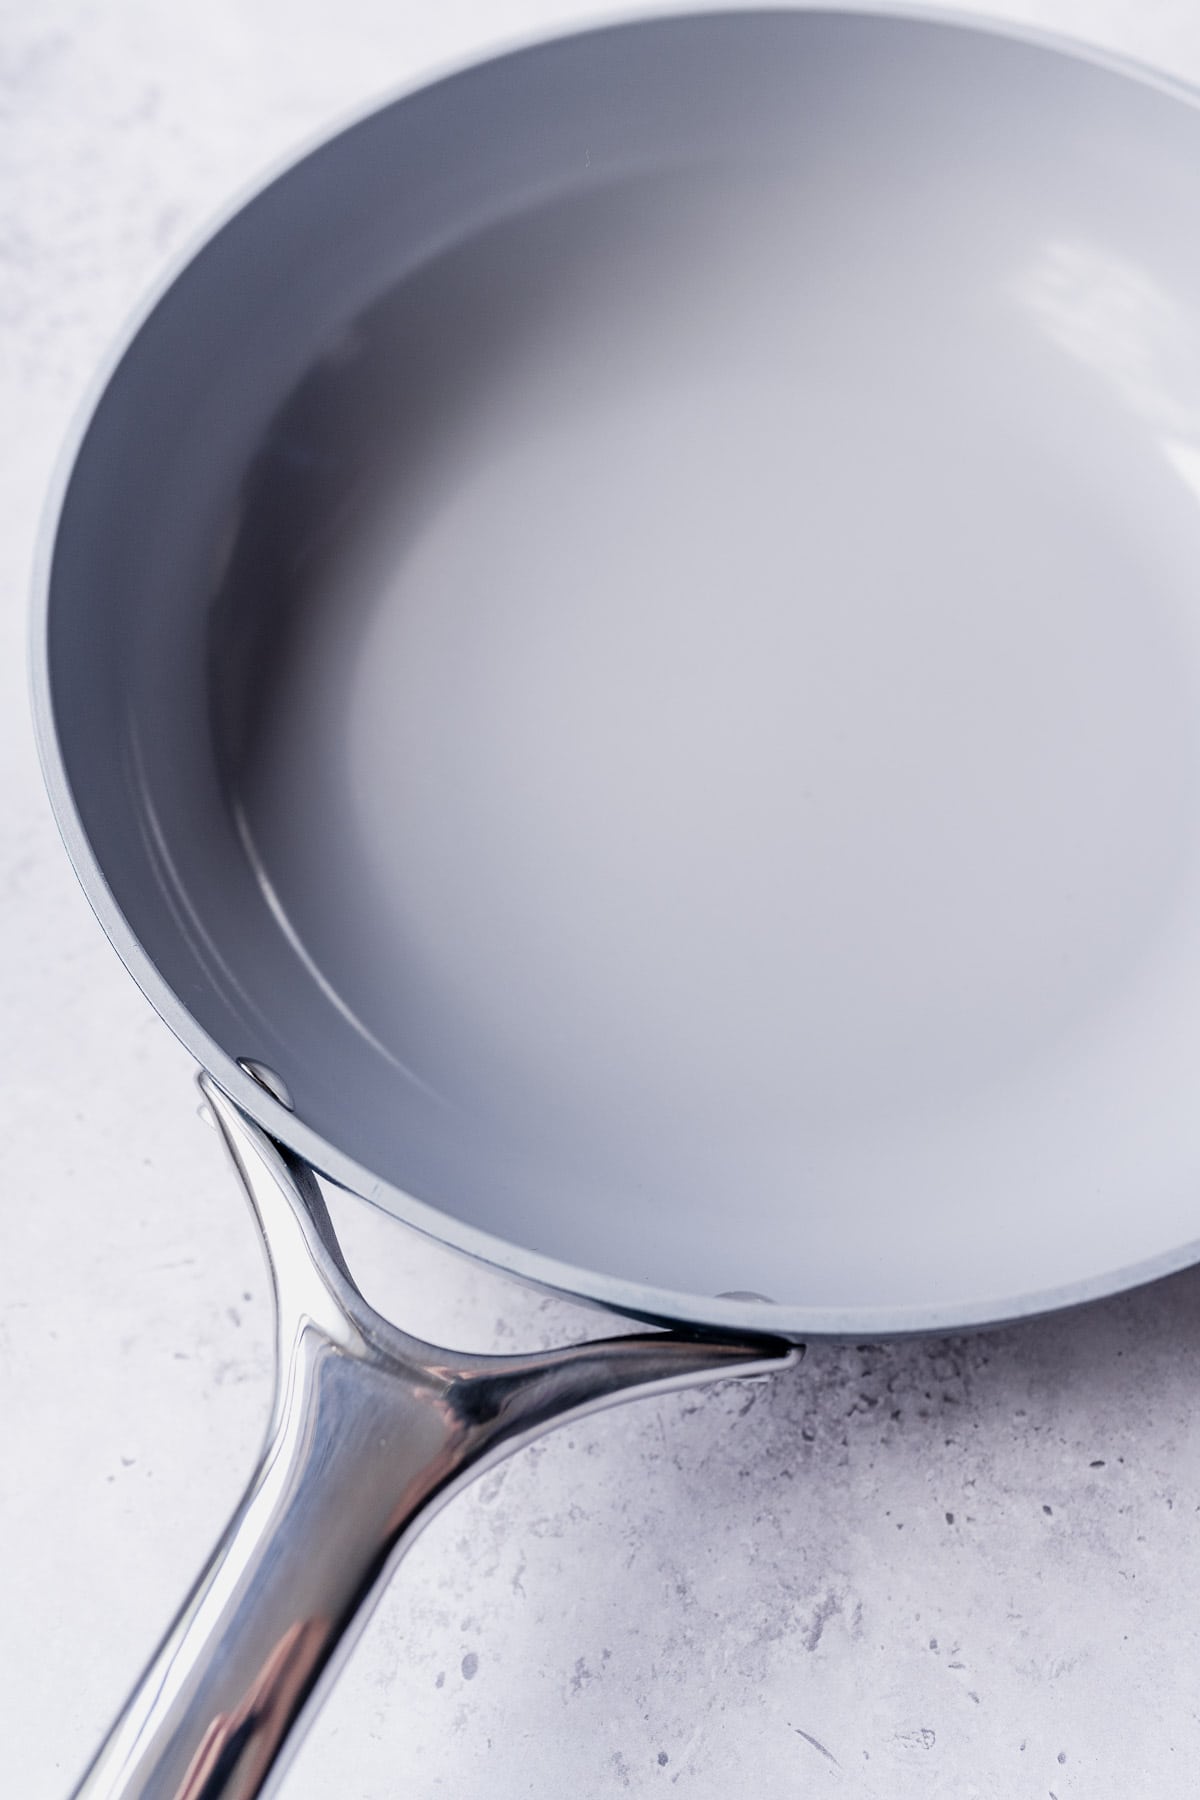 A gray ceramic pan.